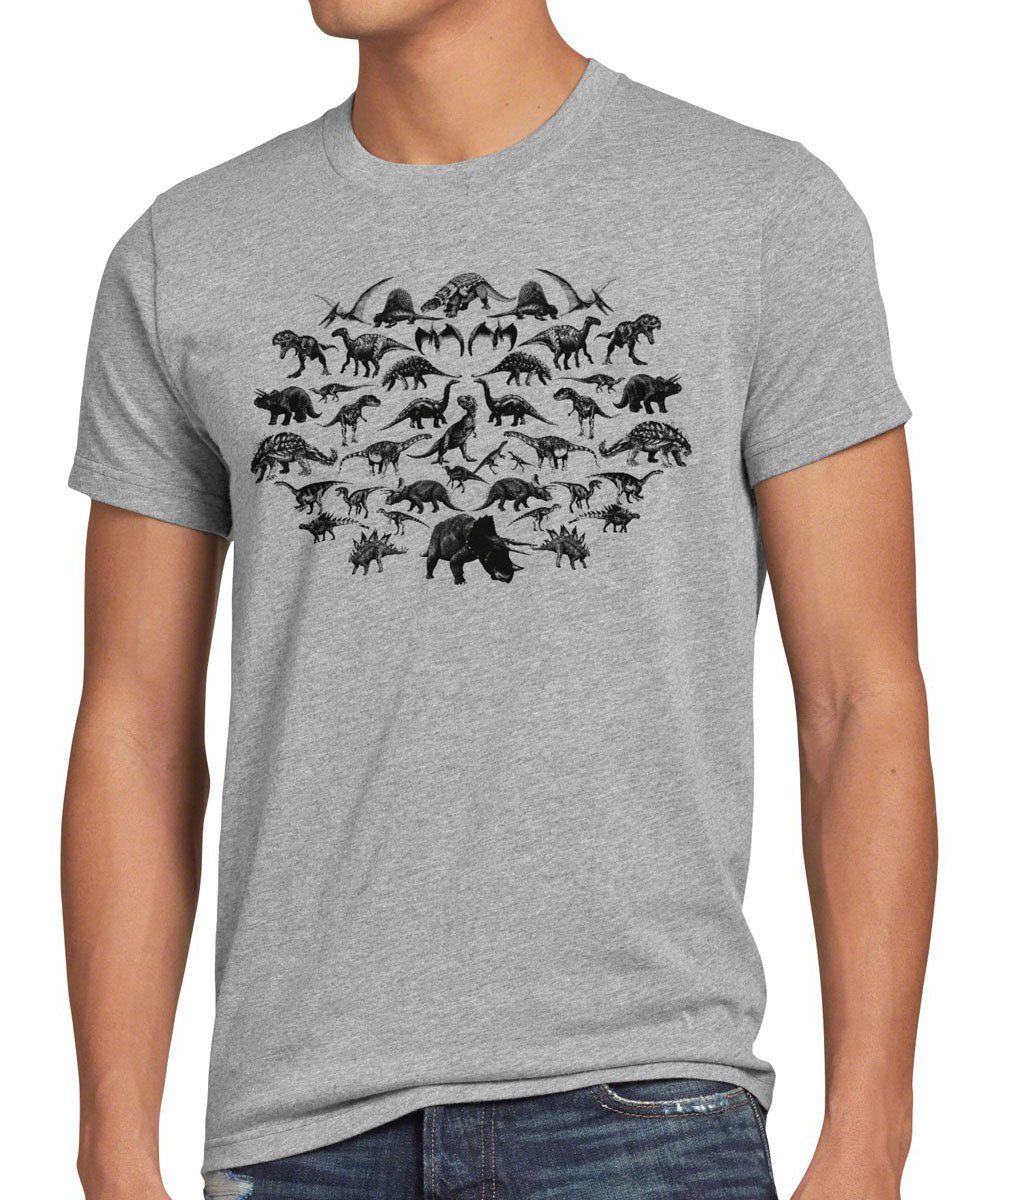 bang Cooper Monster TV Herren Print-Shirt big style3 Dinosaurier Jurassic grau Theory Sheldon meliert T-Shirt